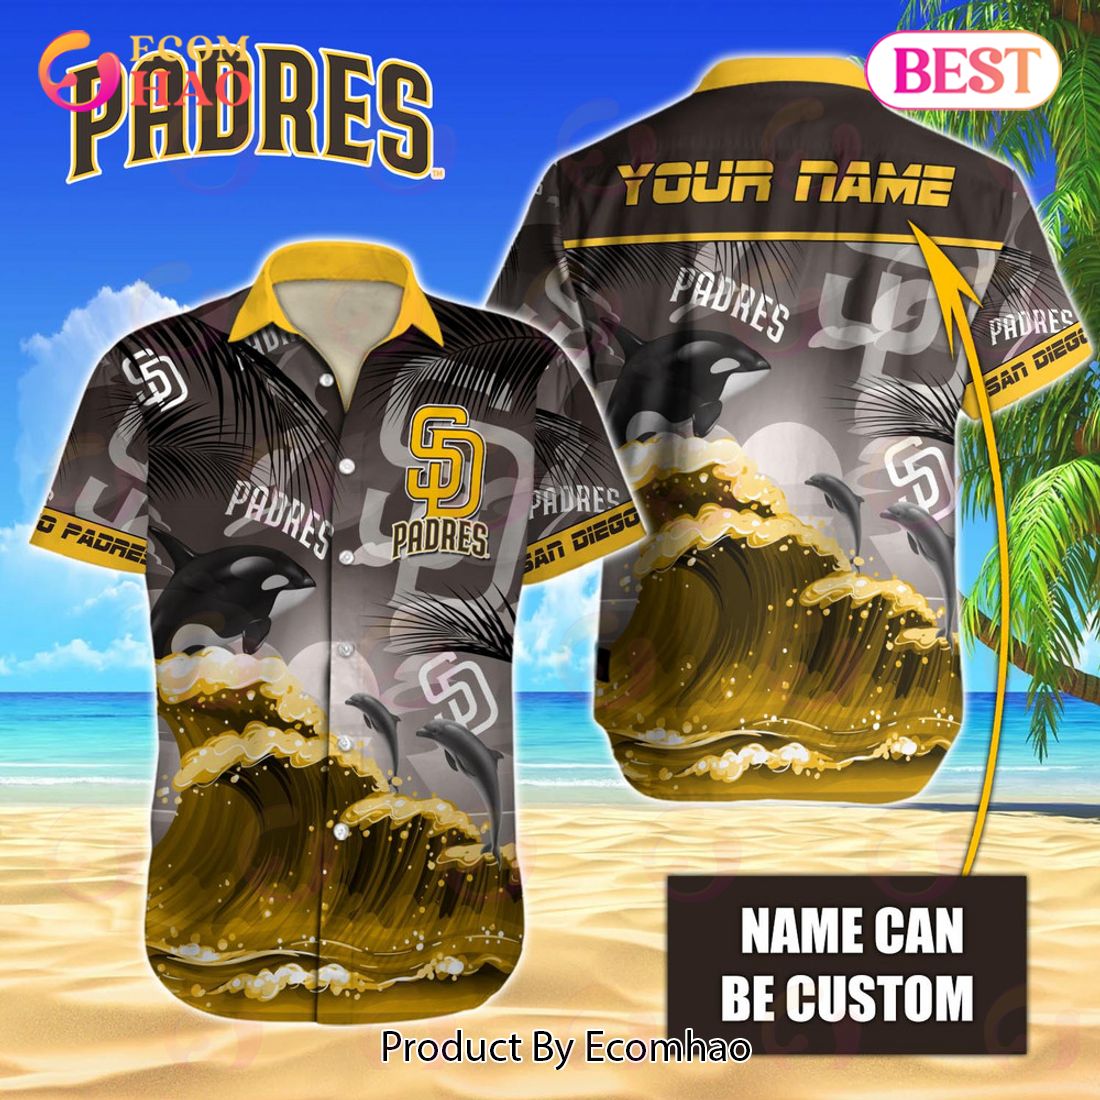 Pittsburgh Pirates Pineapple MLB Hawaiian Shirt For Men And Women Gift For  Fans - Banantees